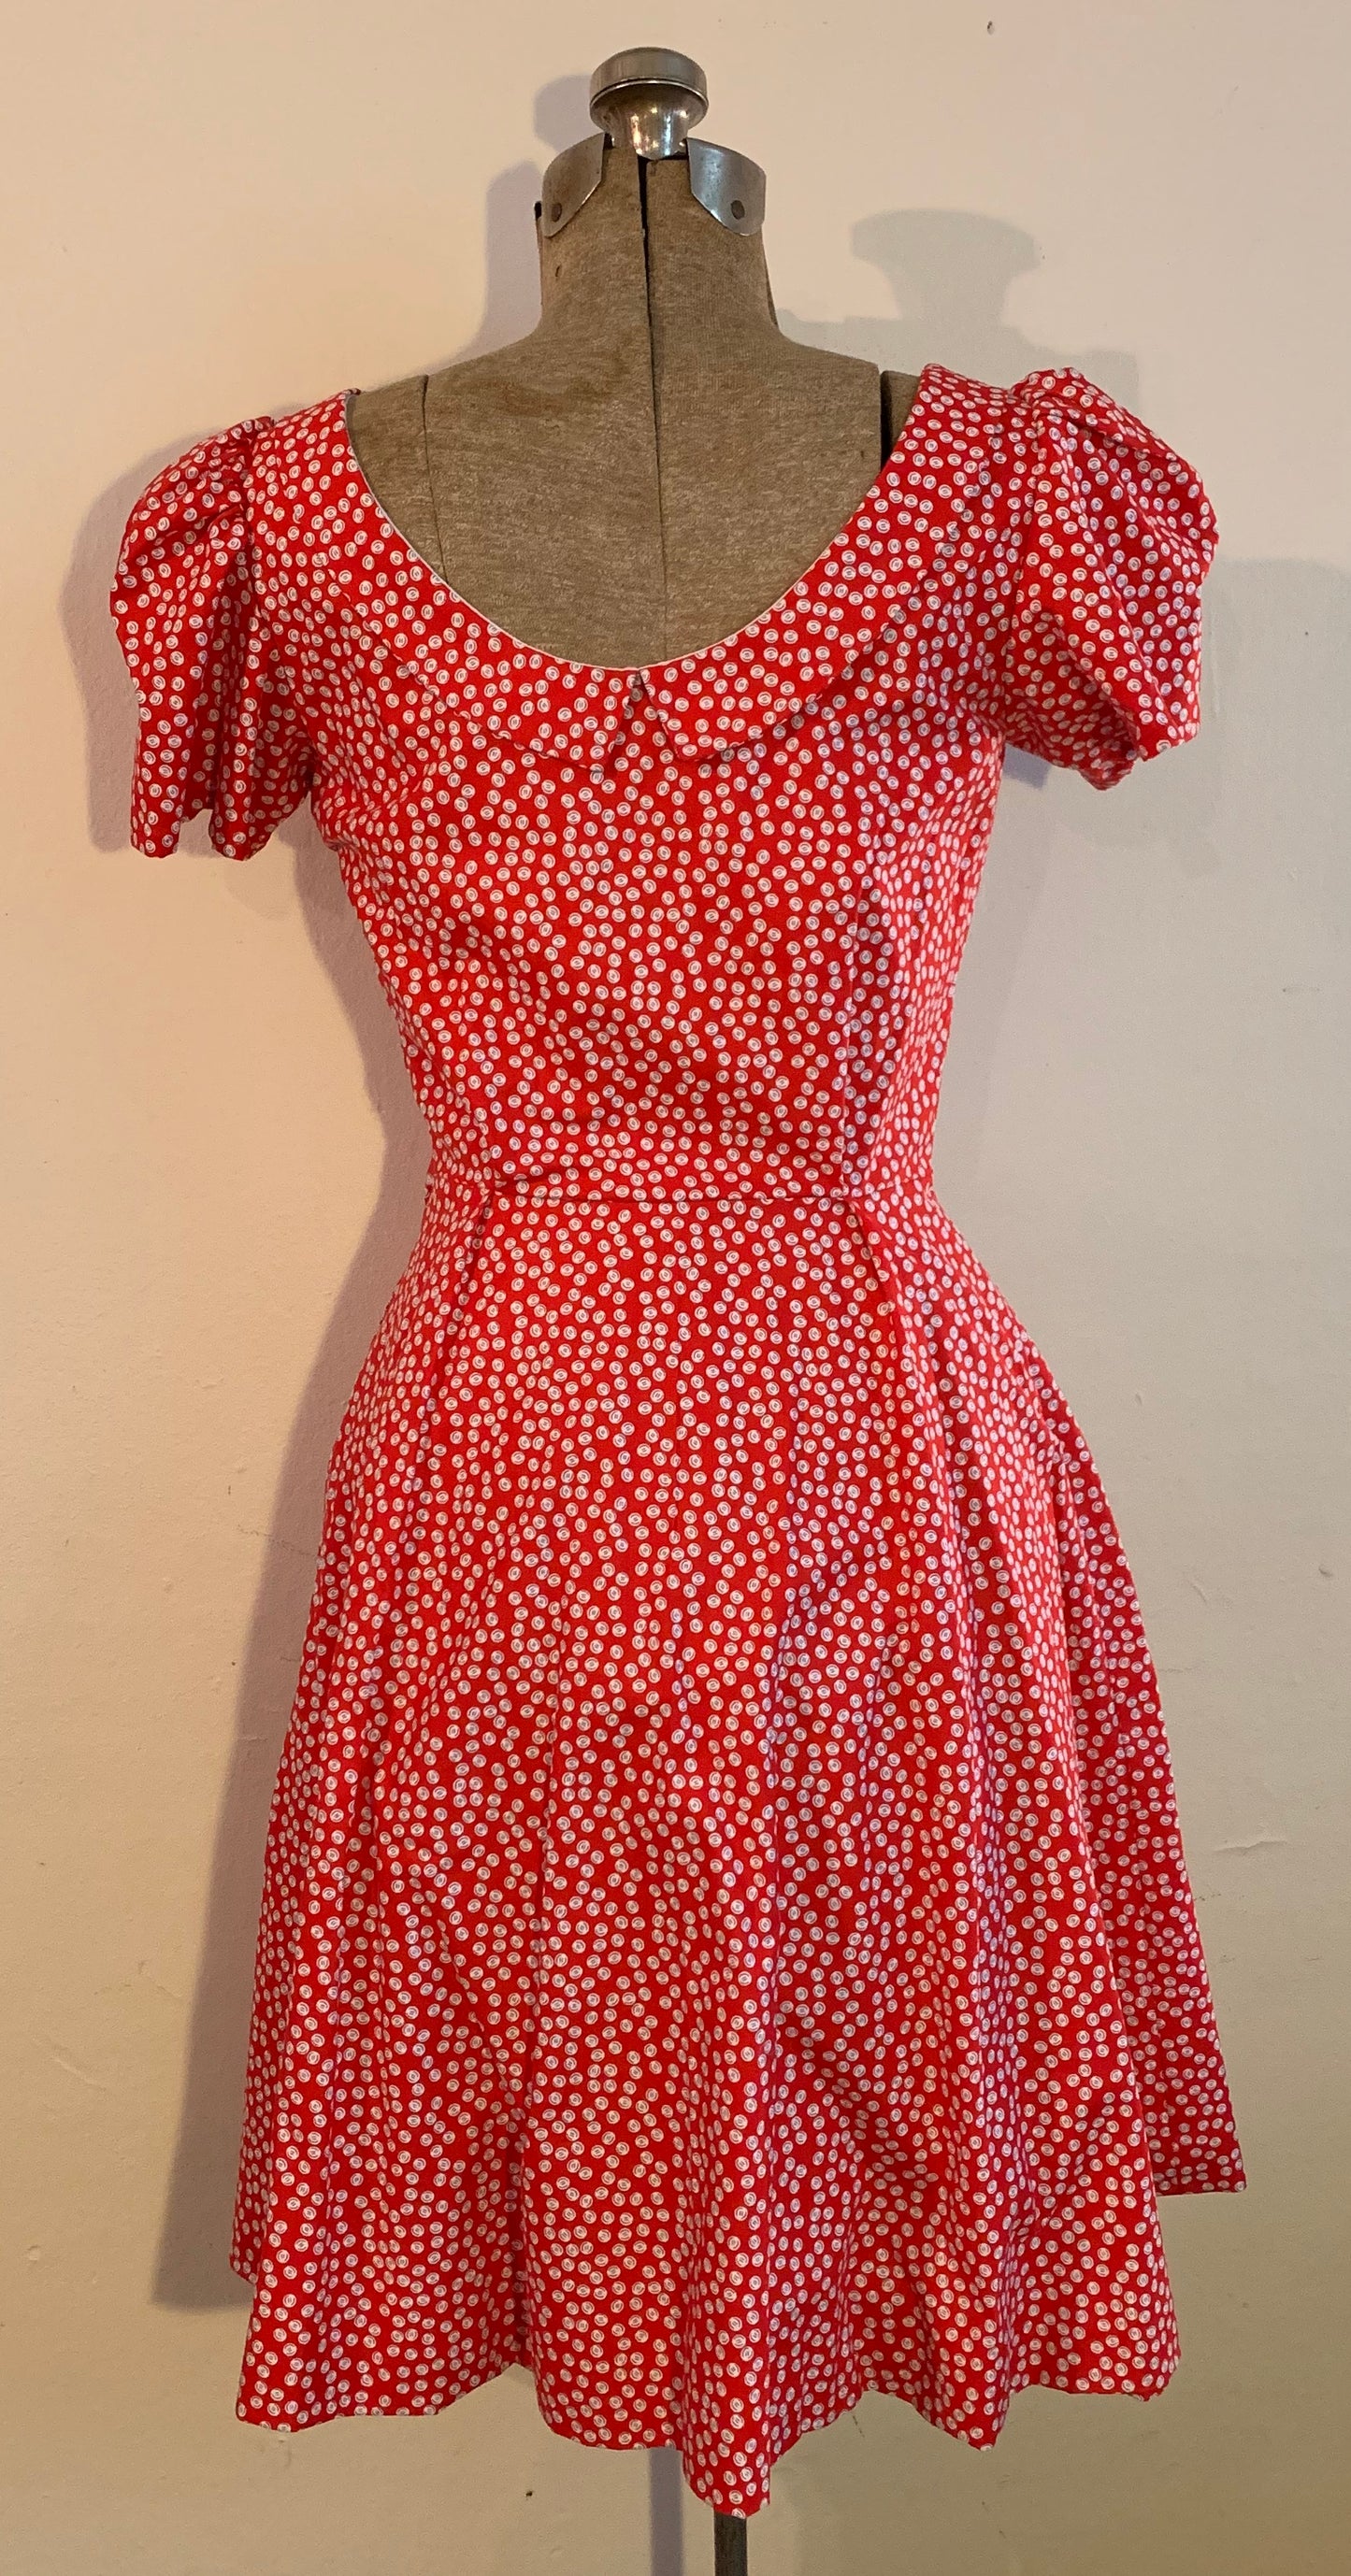 red and white poke-a-dot dress